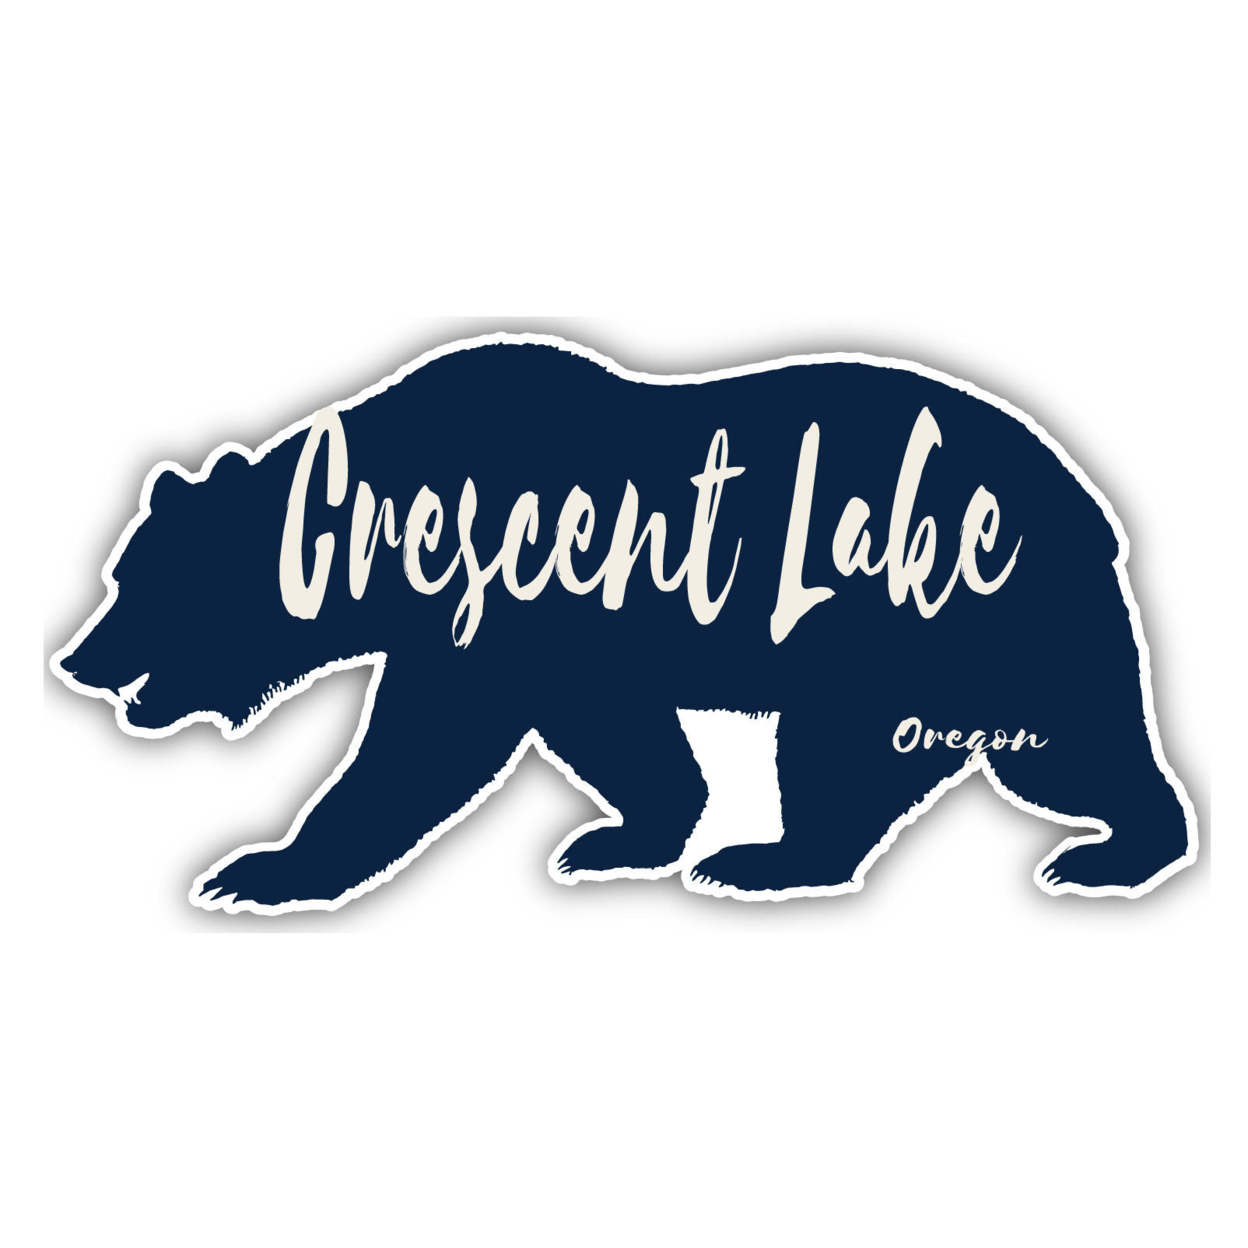 Crescent Lake Oregon Souvenir Decorative Stickers (Choose Theme And Size) - Single Unit, 10-Inch, Bear